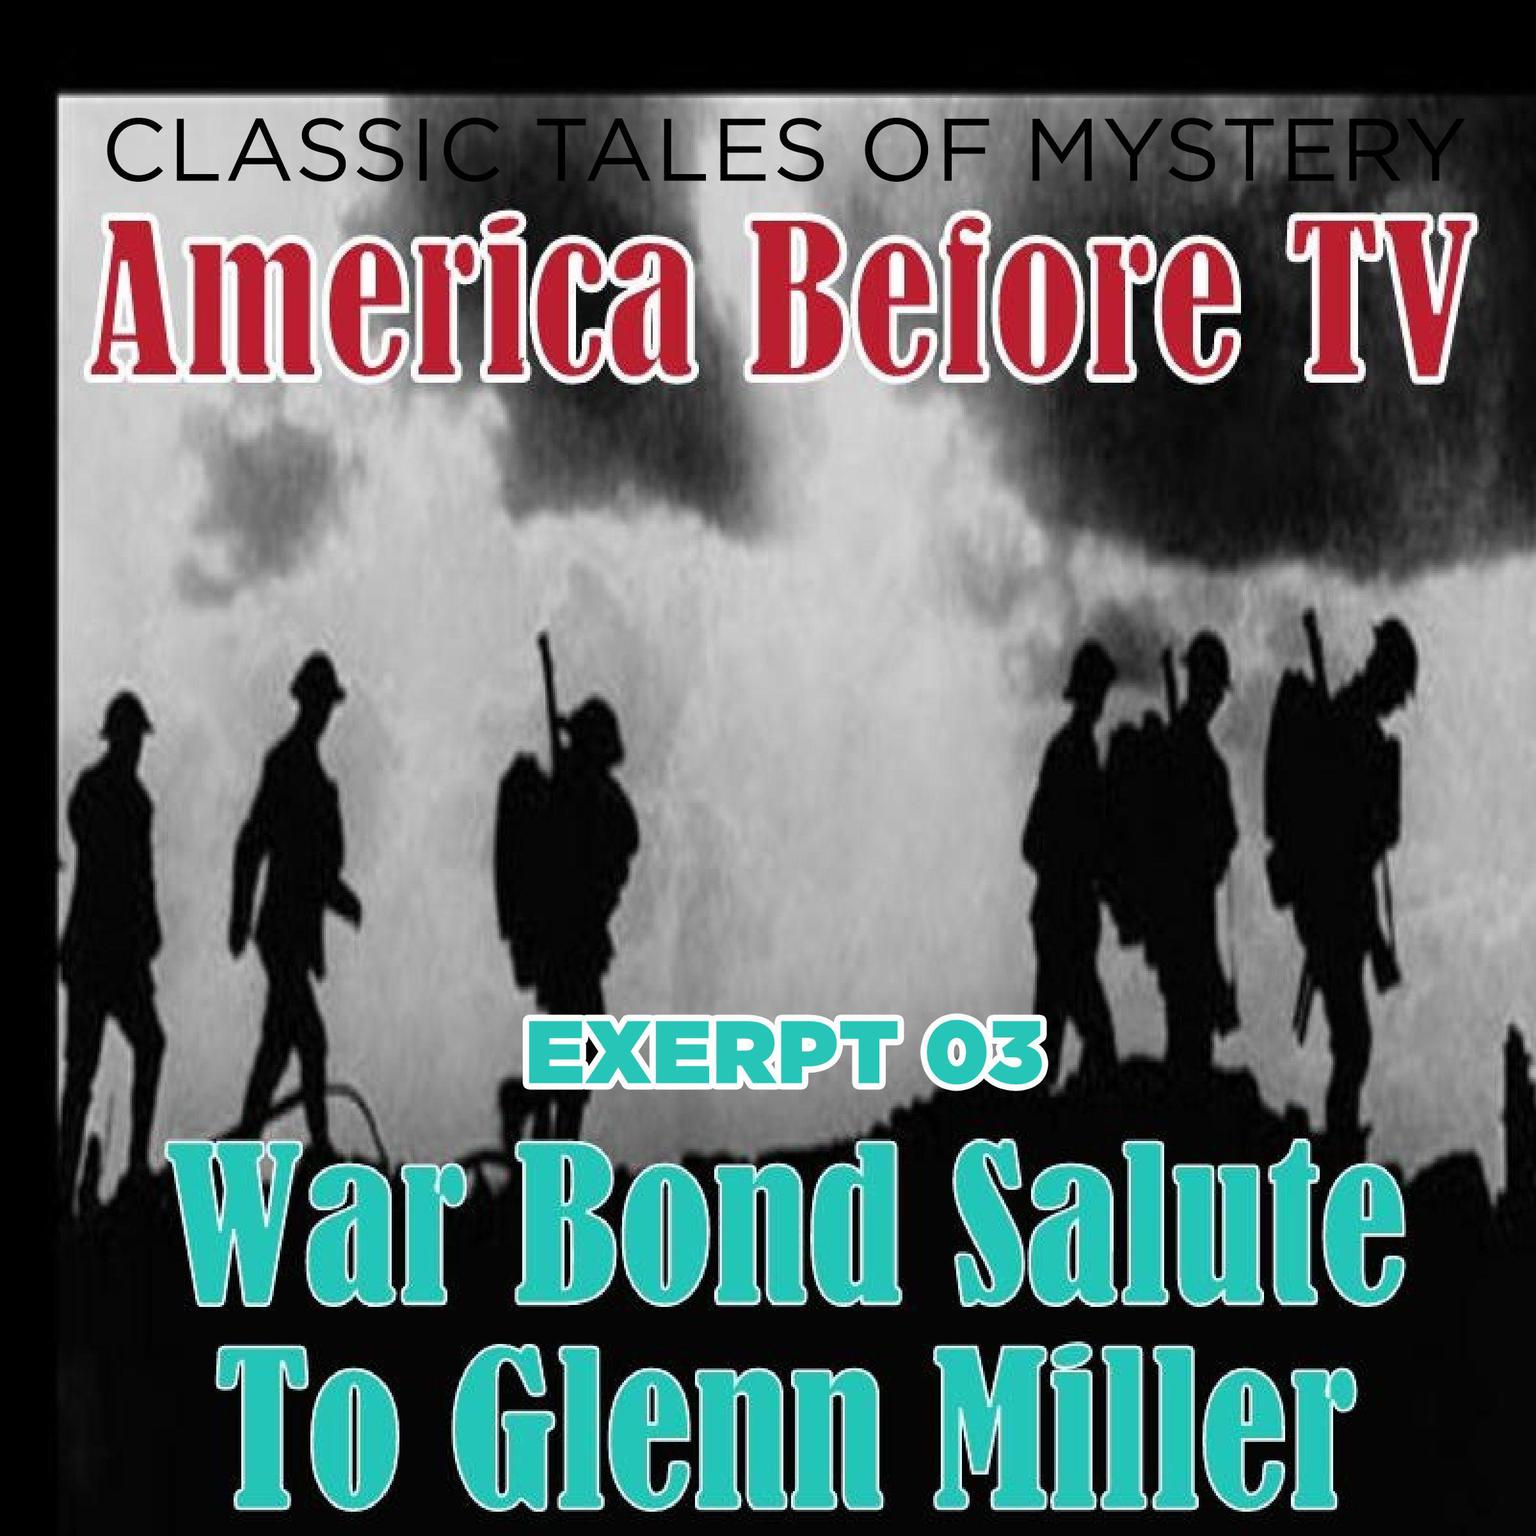 America Before TV - War Bond Salute To Glenn Miller [Excerpt 03] (Abridged) Audiobook, by Ralph Cosham & Others